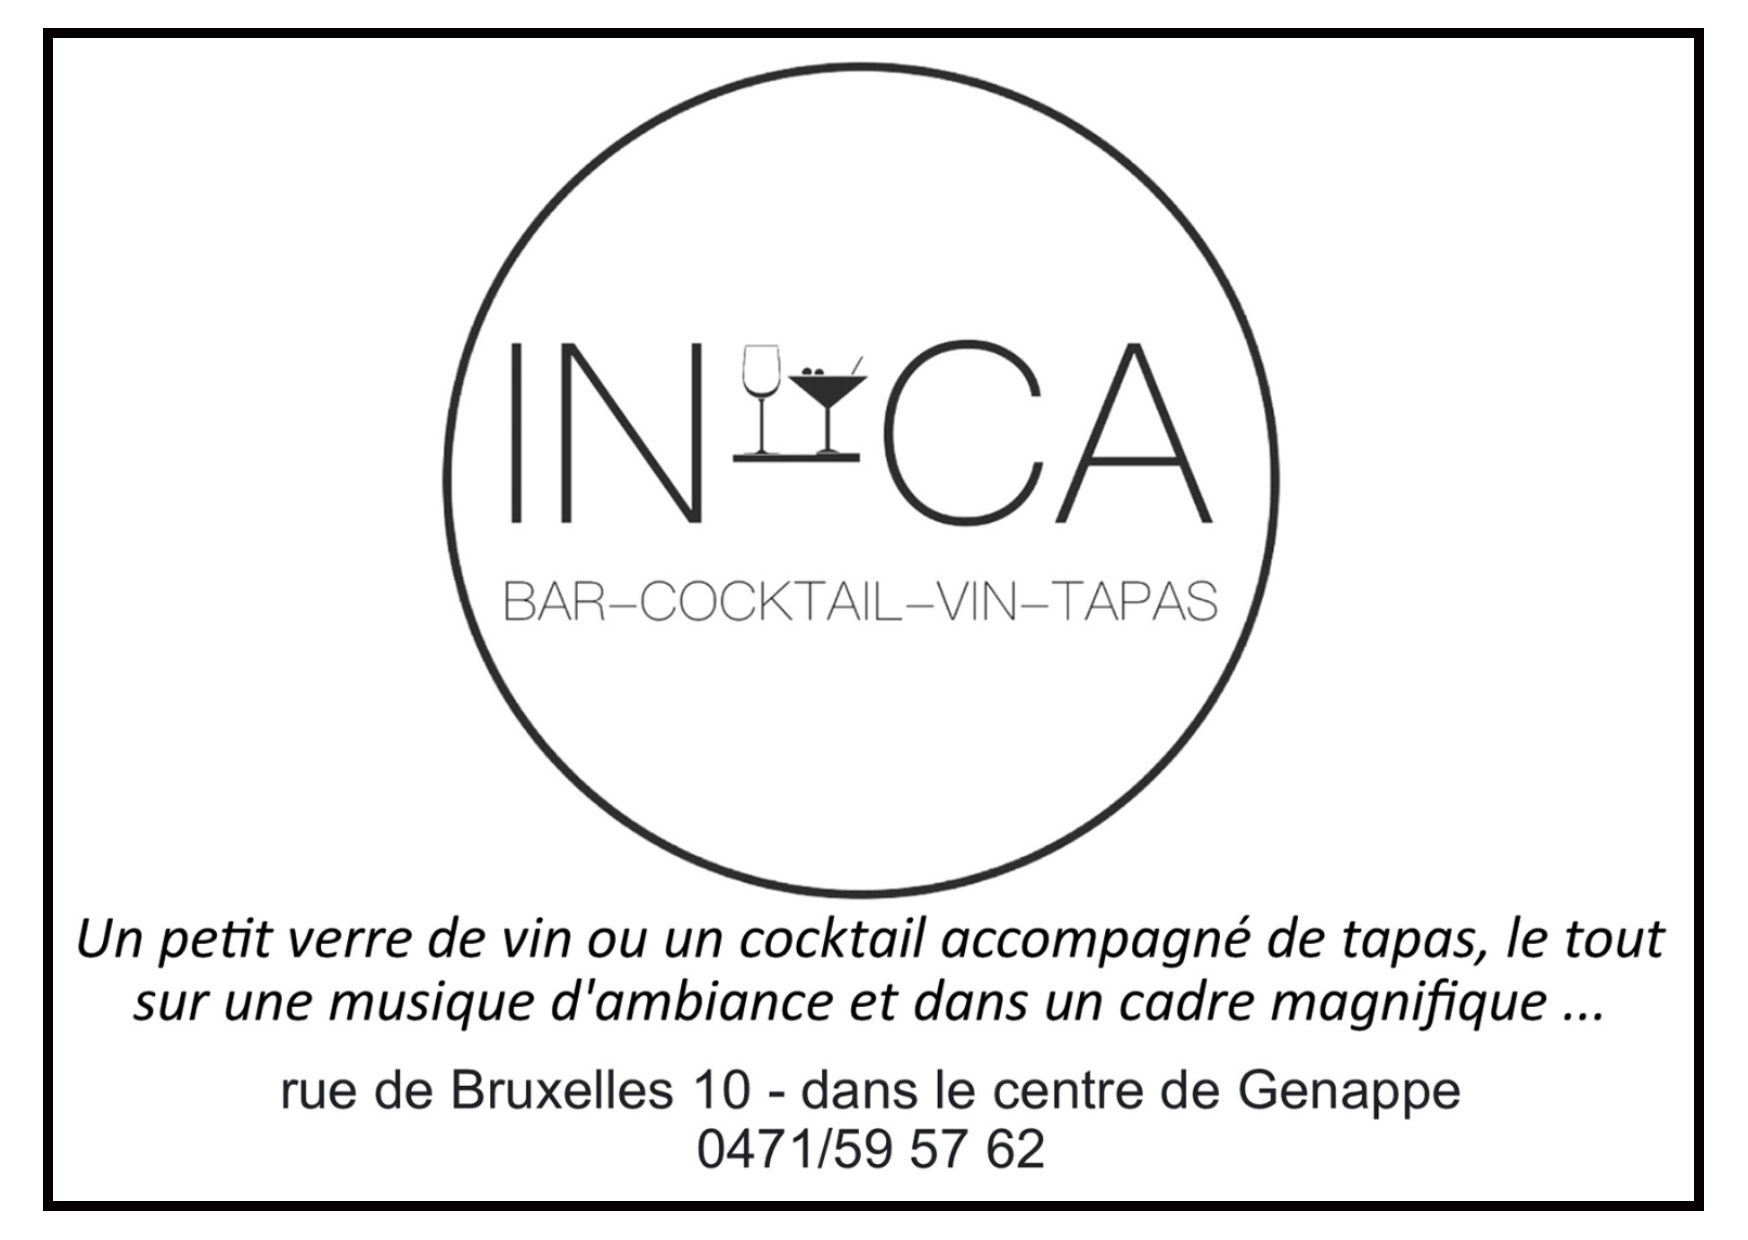 Inca Bar